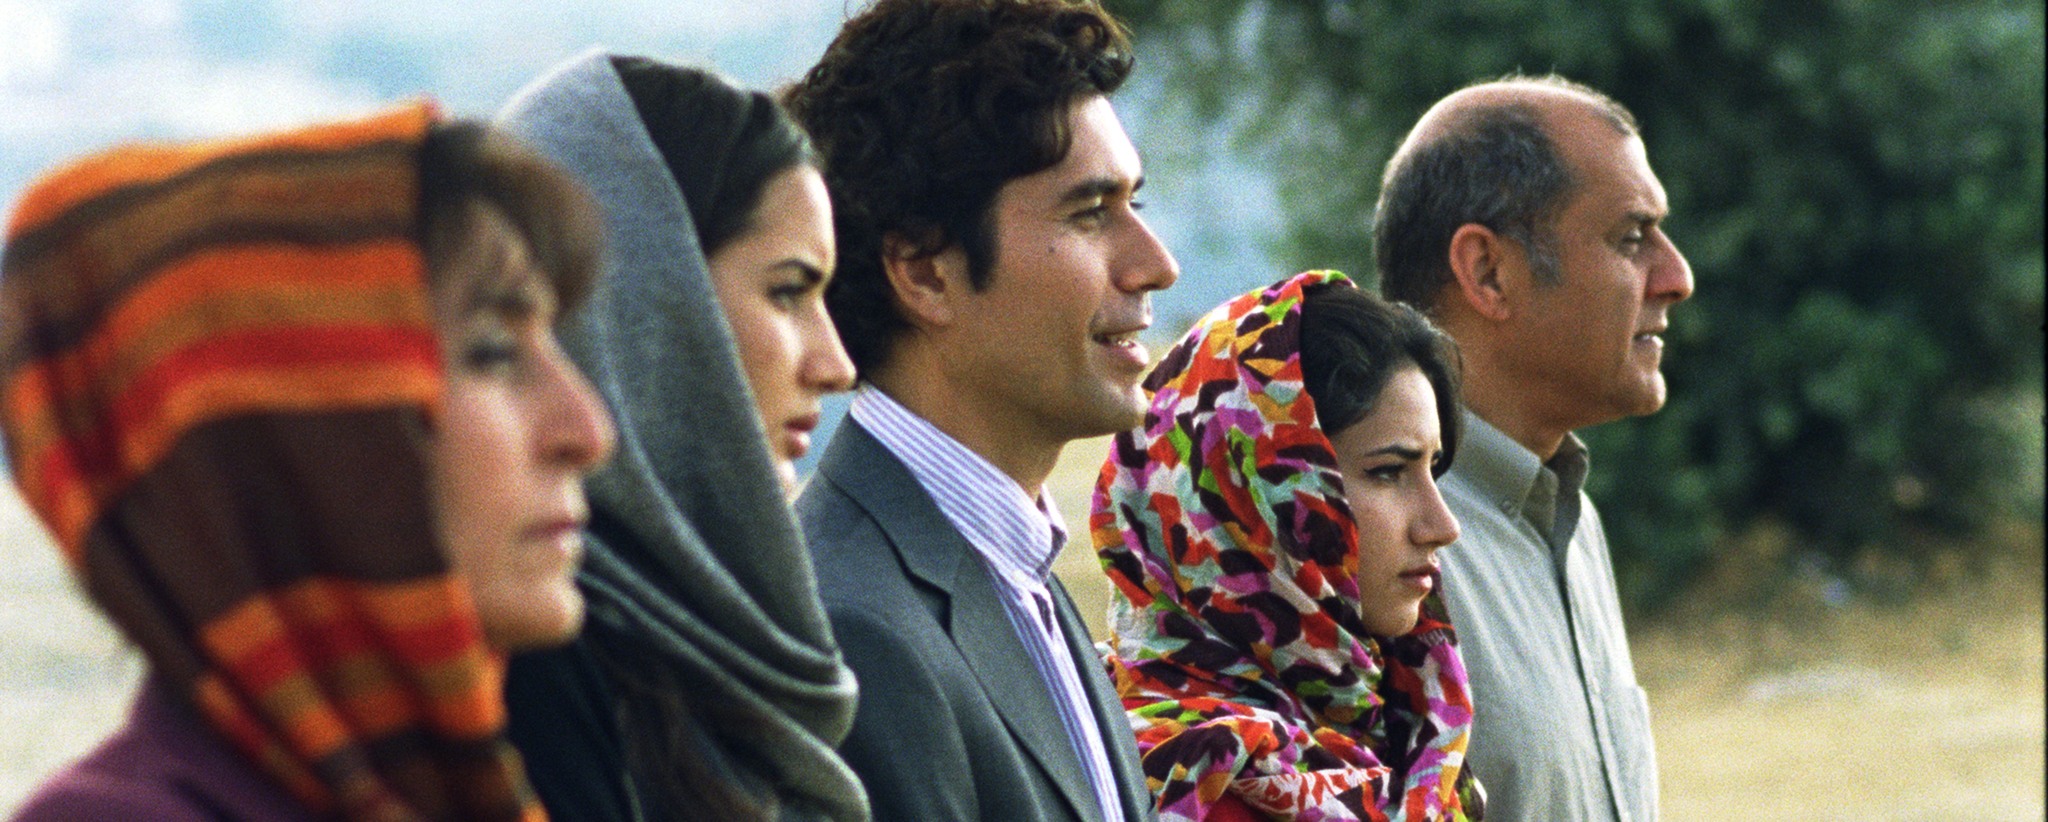 Still of Nasrin Pakkho, Reza Safai, Sarah Kazemy and Soheil Parsa in Circumstance (2011)